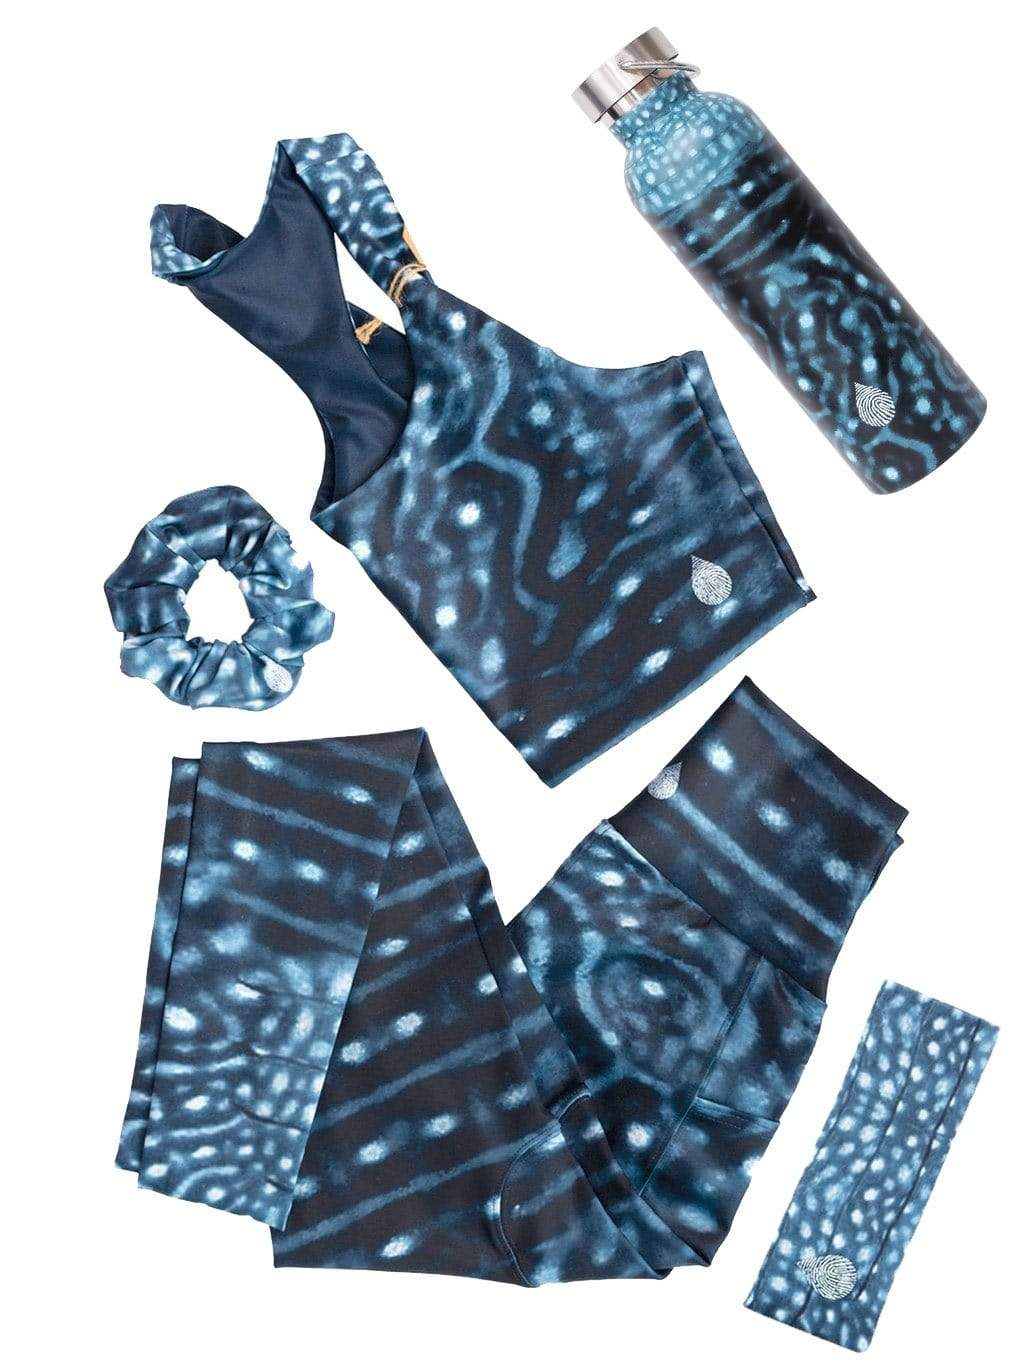 Whale Shark Printed Clothing - Leggings, Board Shorts, Rashguards